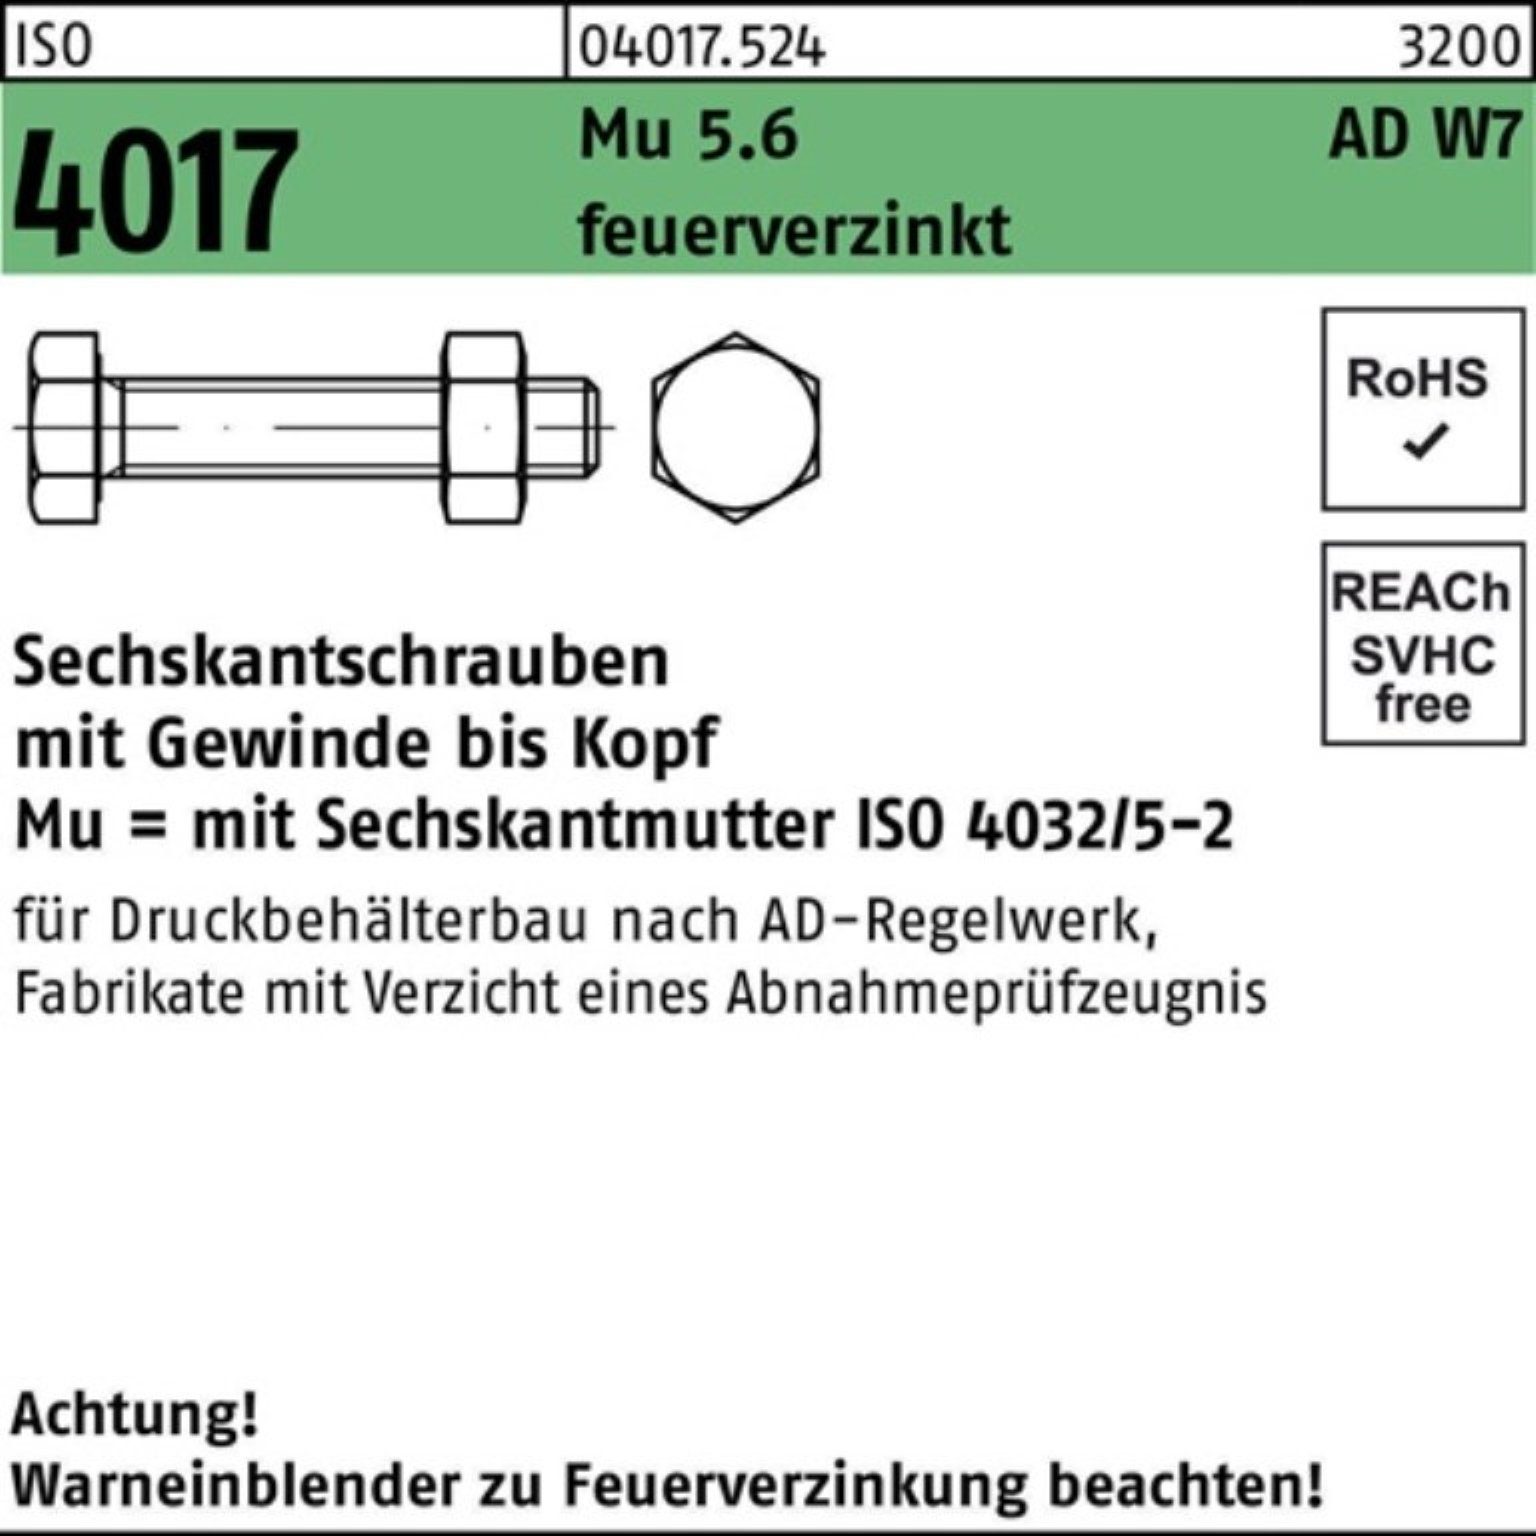 Bufab Sechskantschraube 100er Pack Sechskantschraube feue 5.6 ISO VG AD W7 4017 40 Mutter M12x